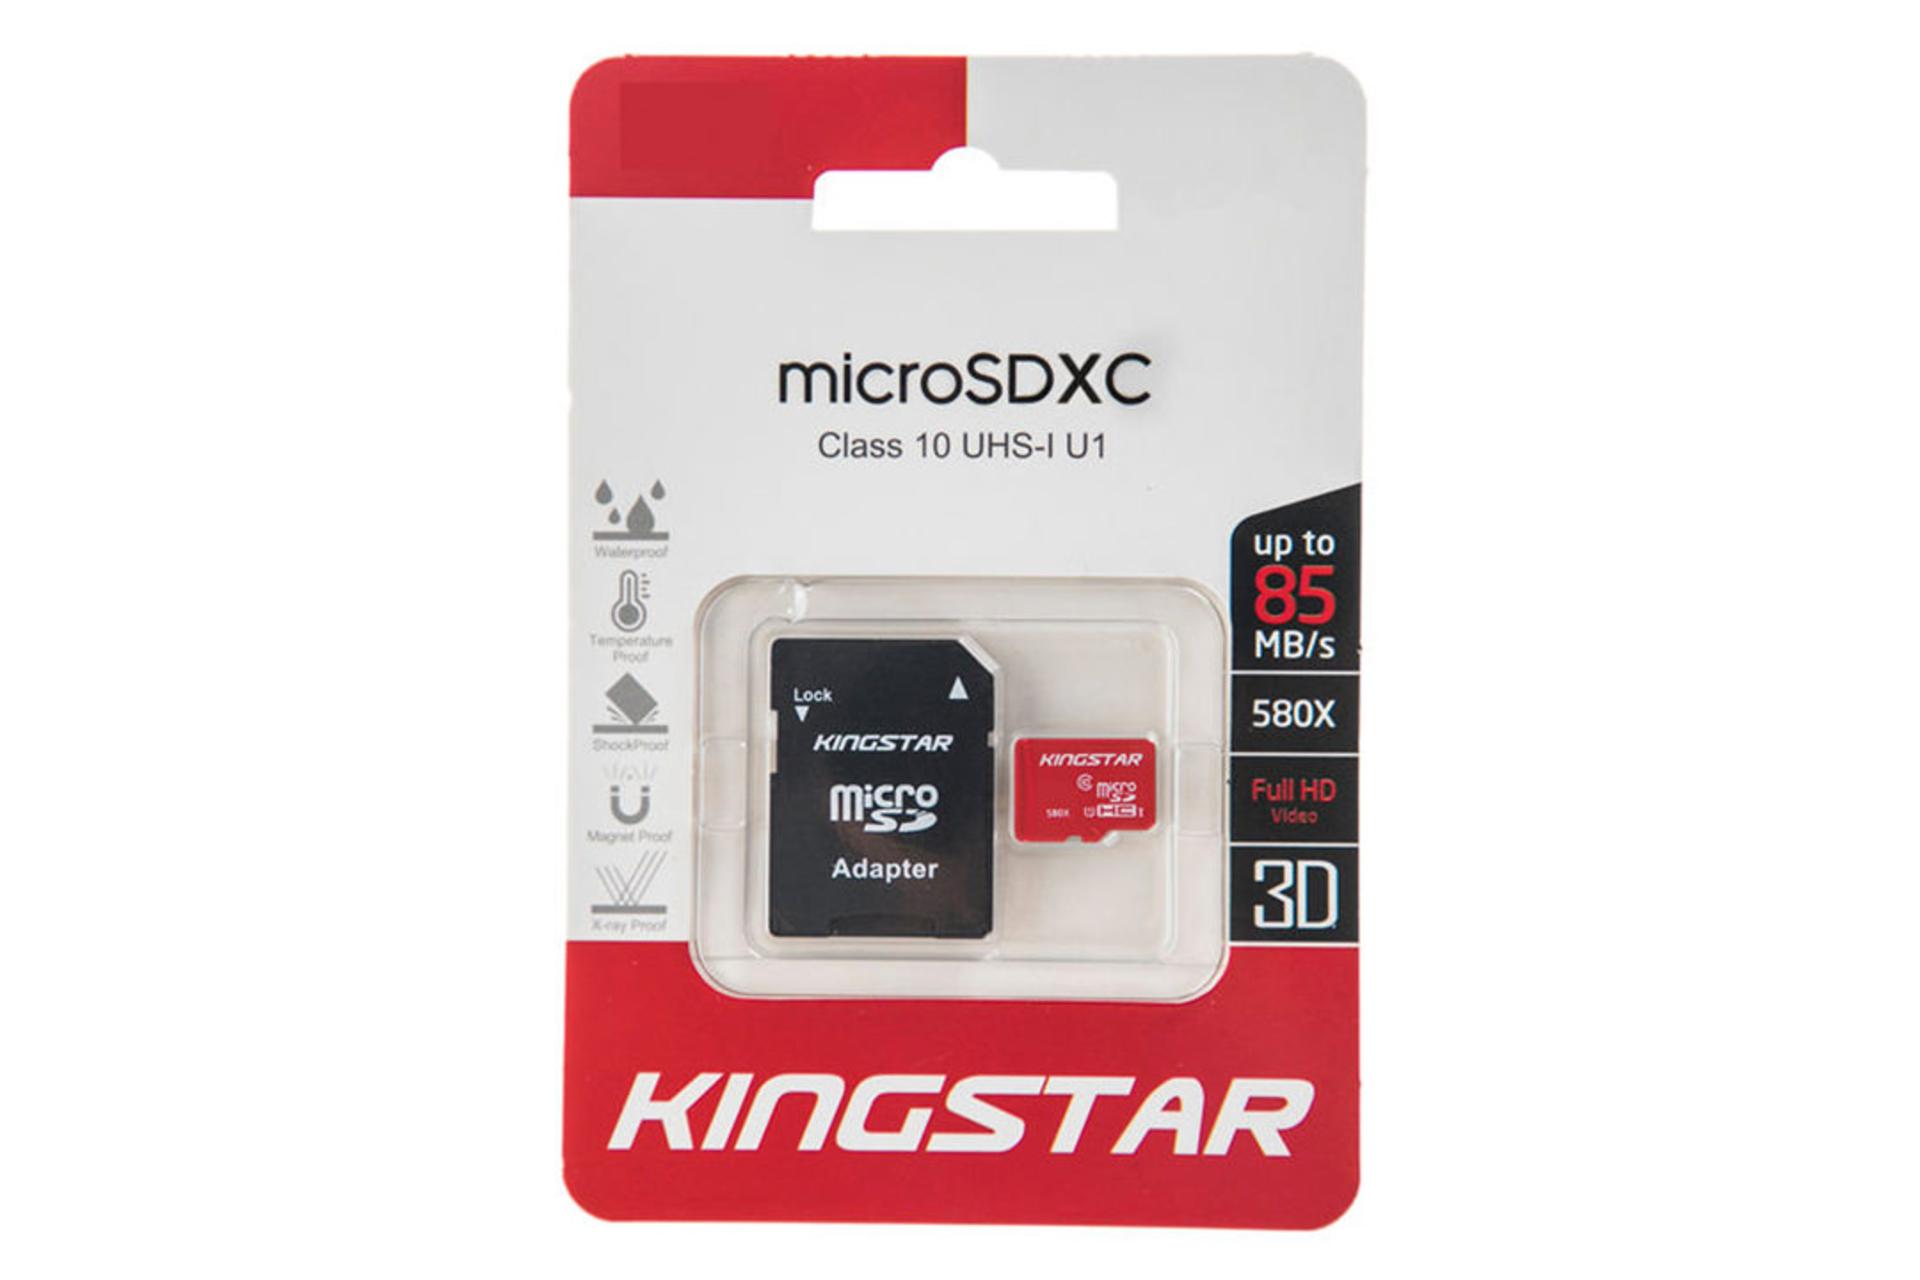 KingStar microSDXC Class 10 UHS-I U1 64GB